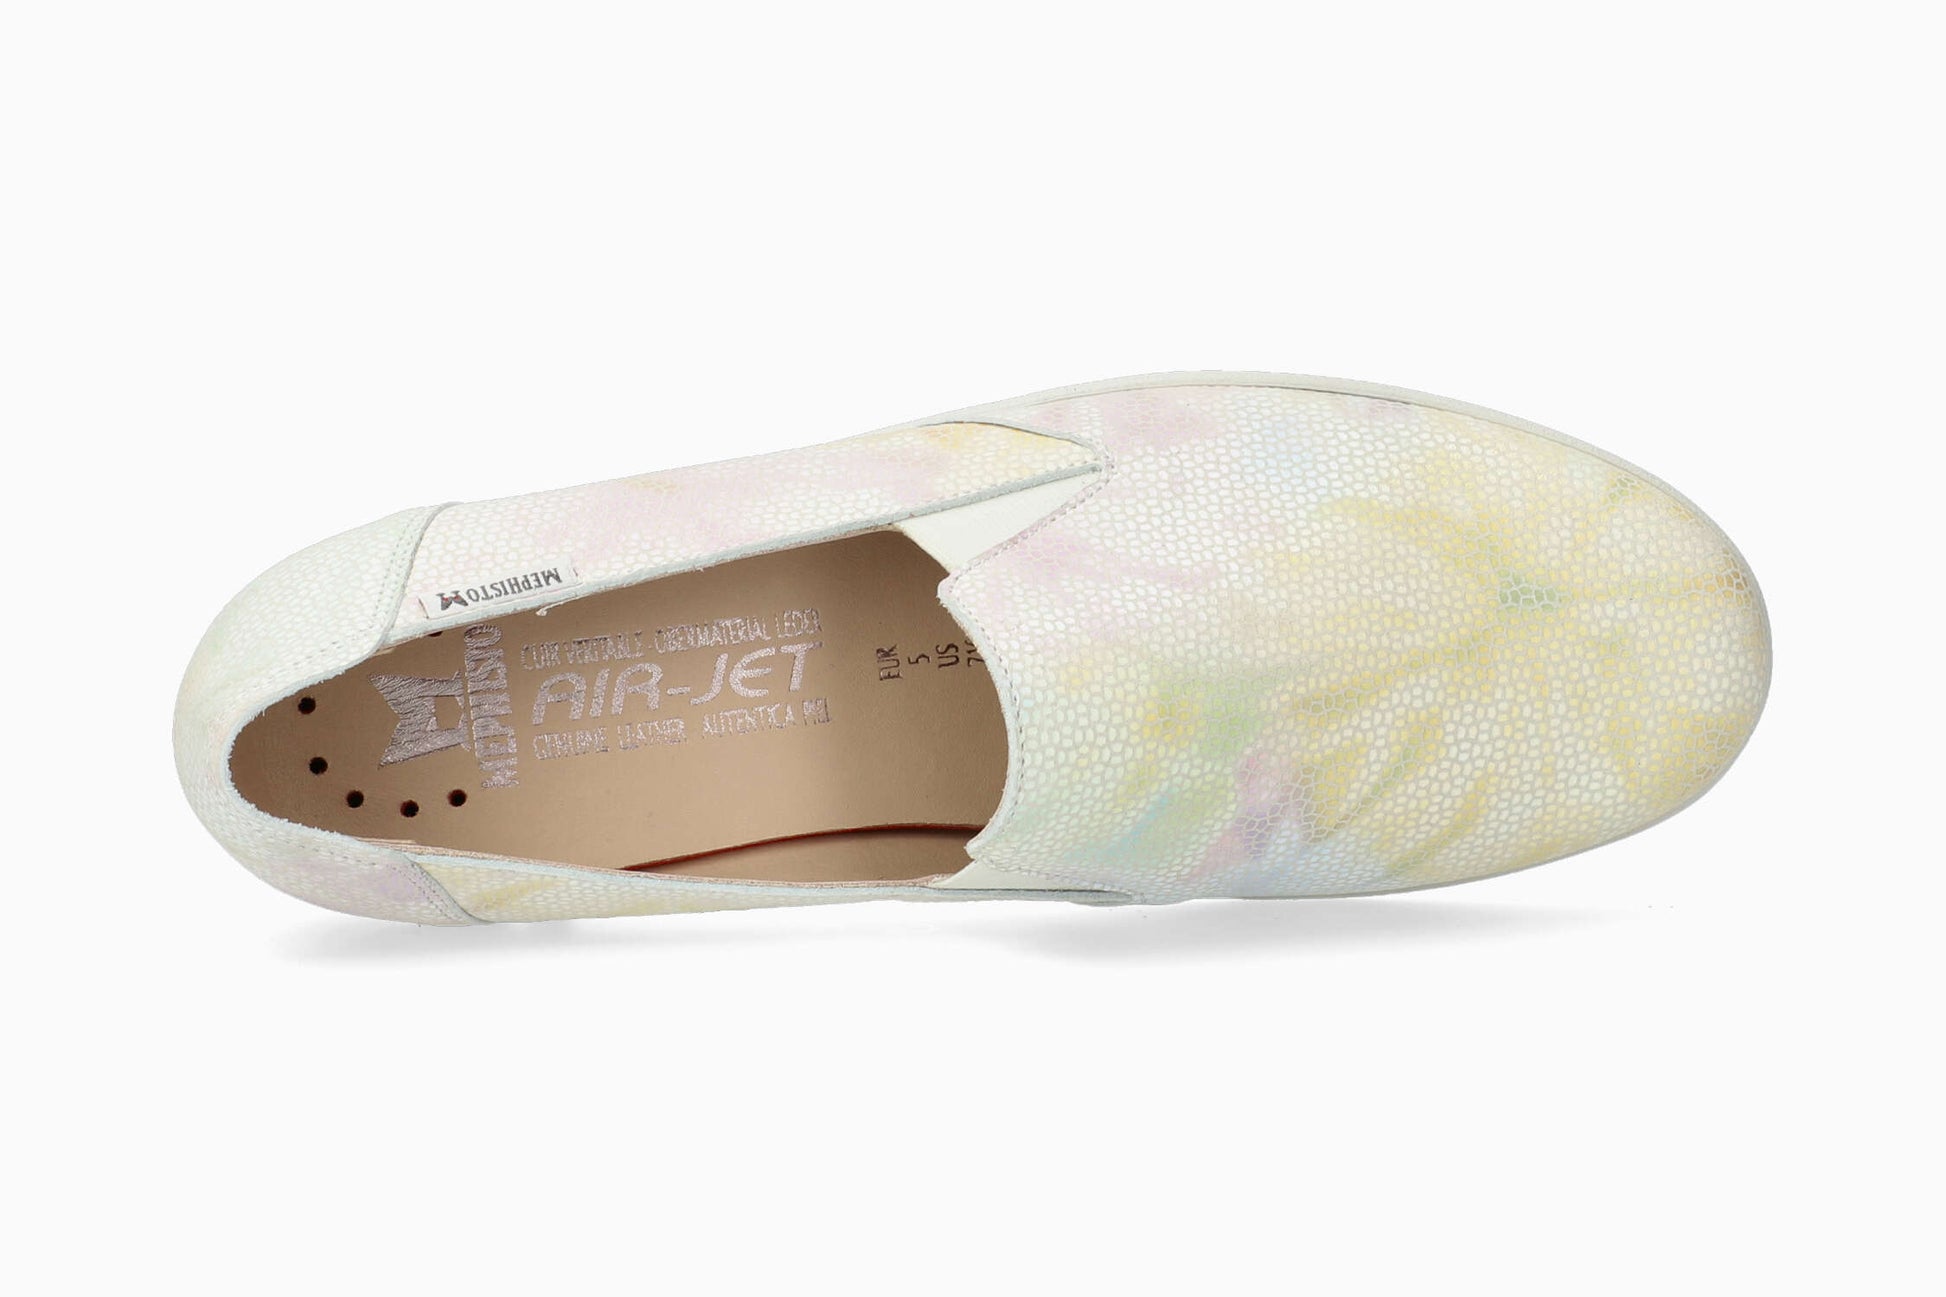 Mephisto Korie Women's Shoe Multicolored Top